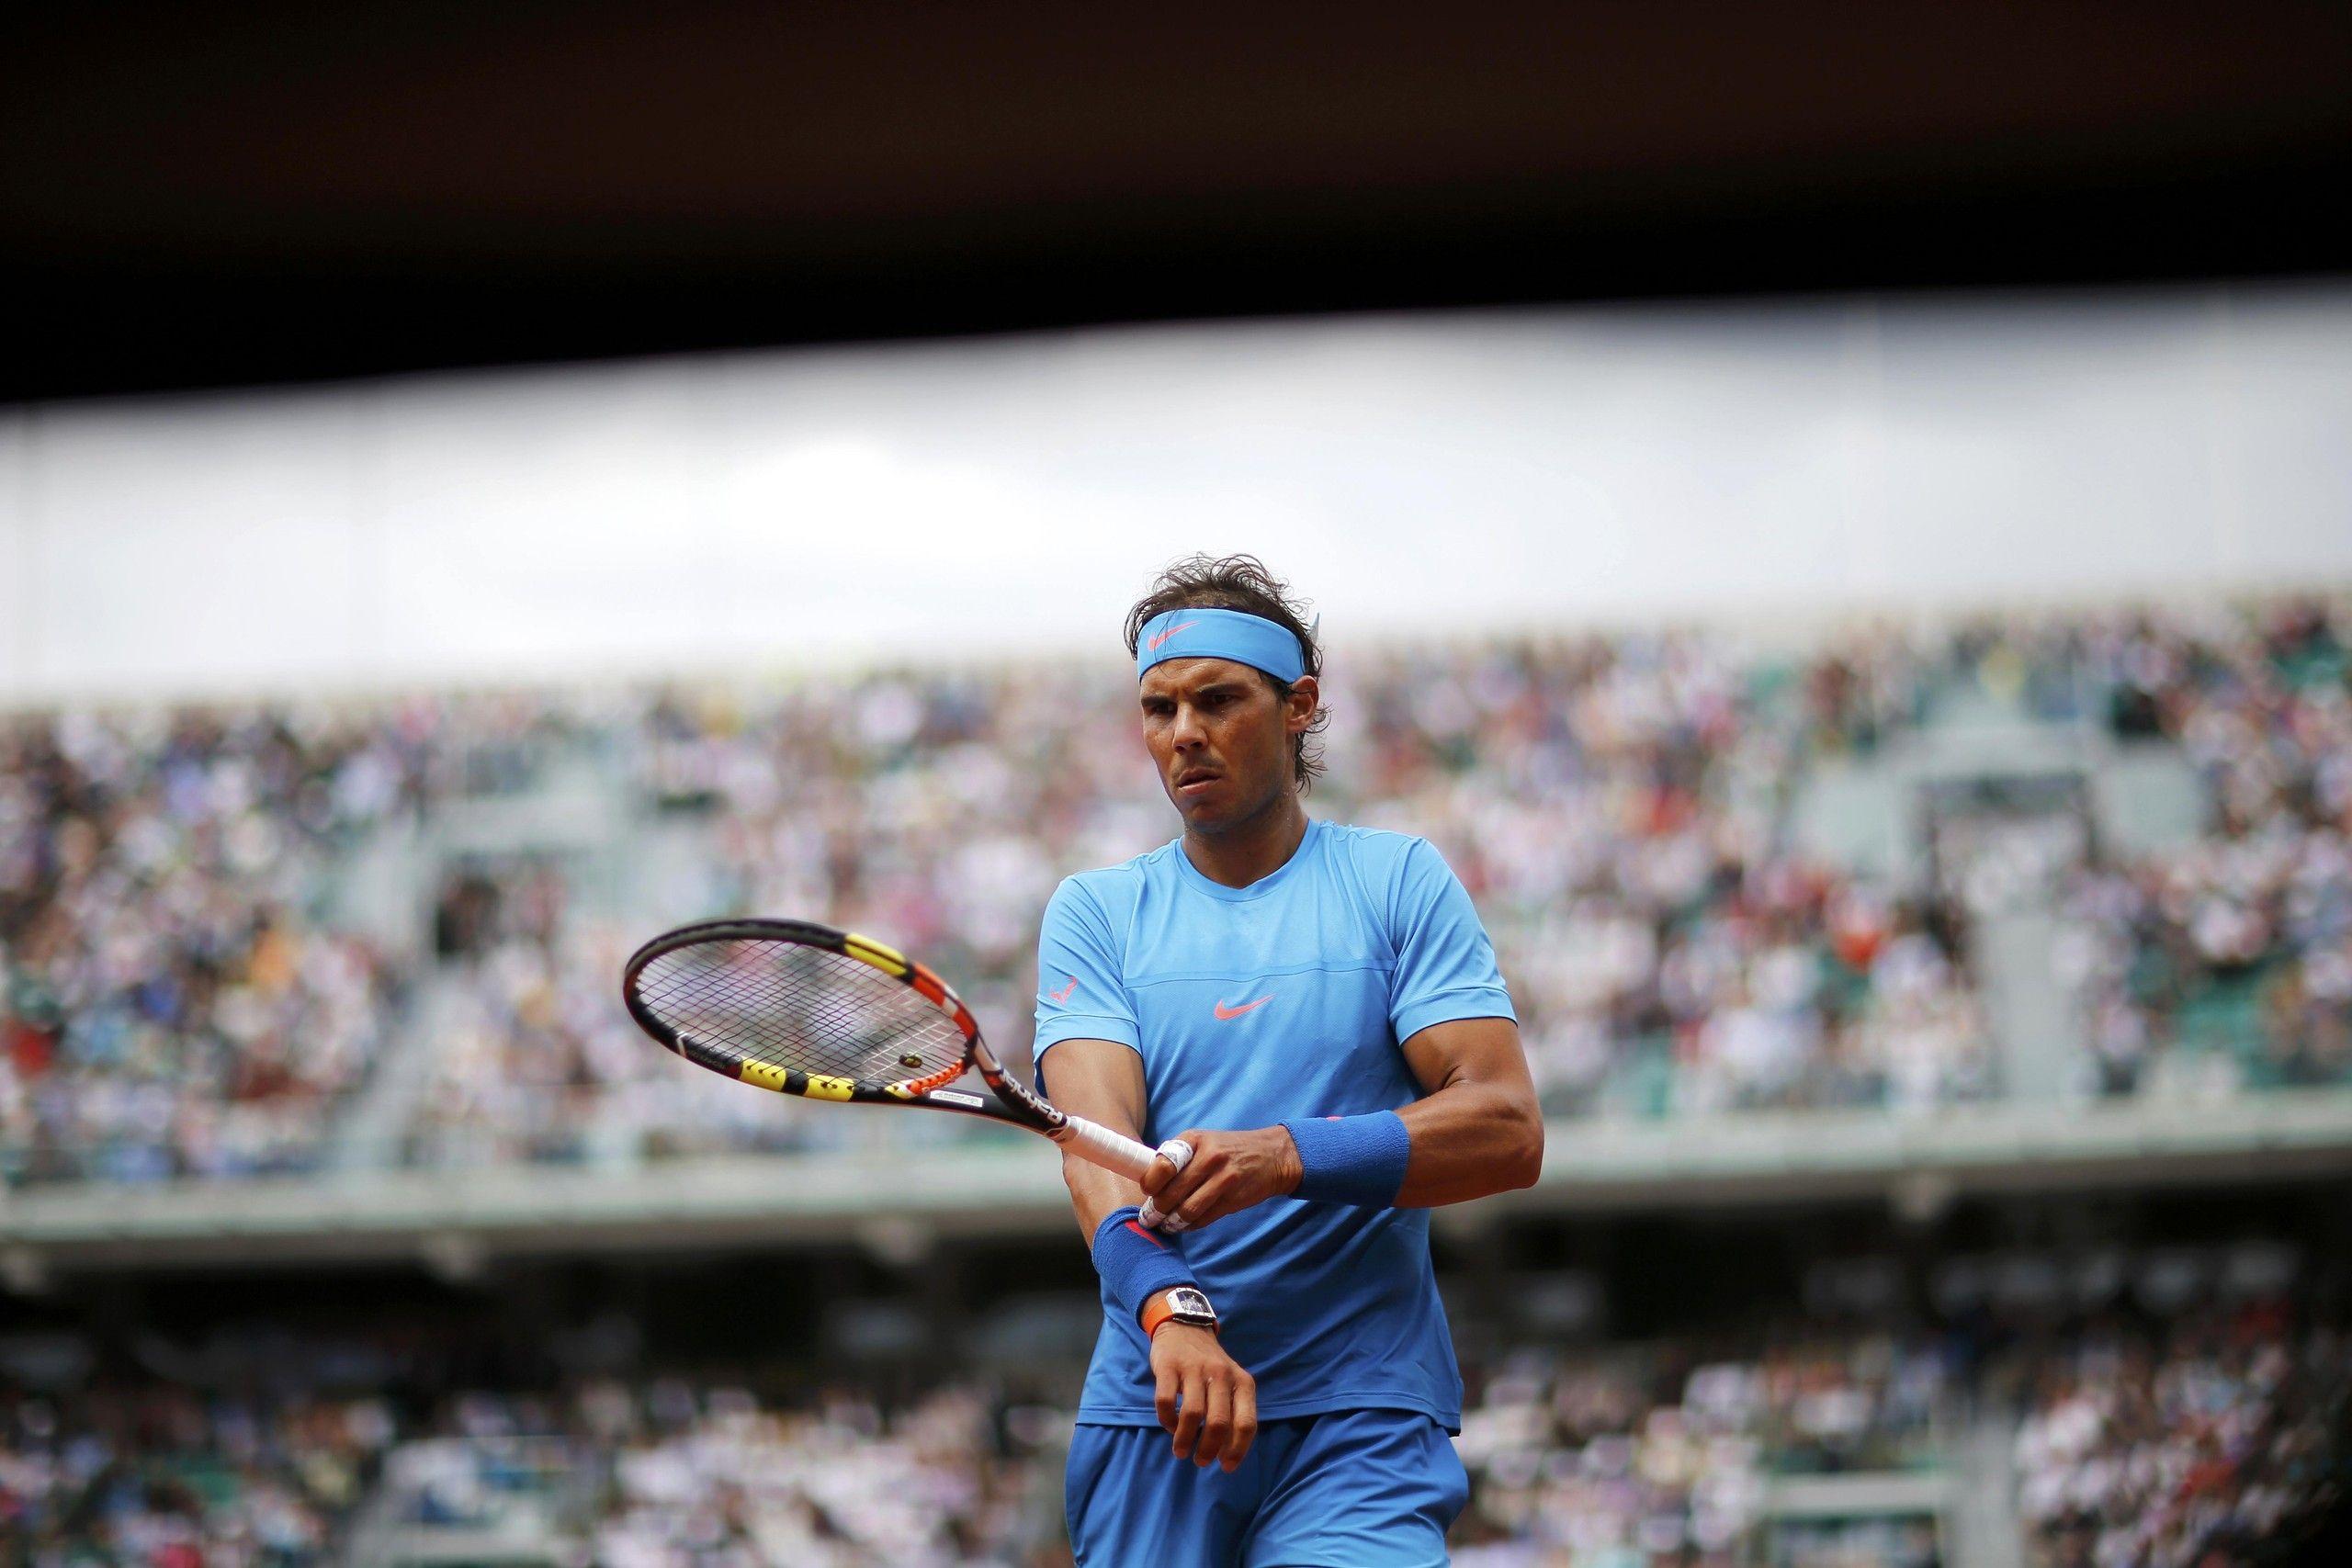 Rafael Nadal Tennis Match 2015 Wallpaper